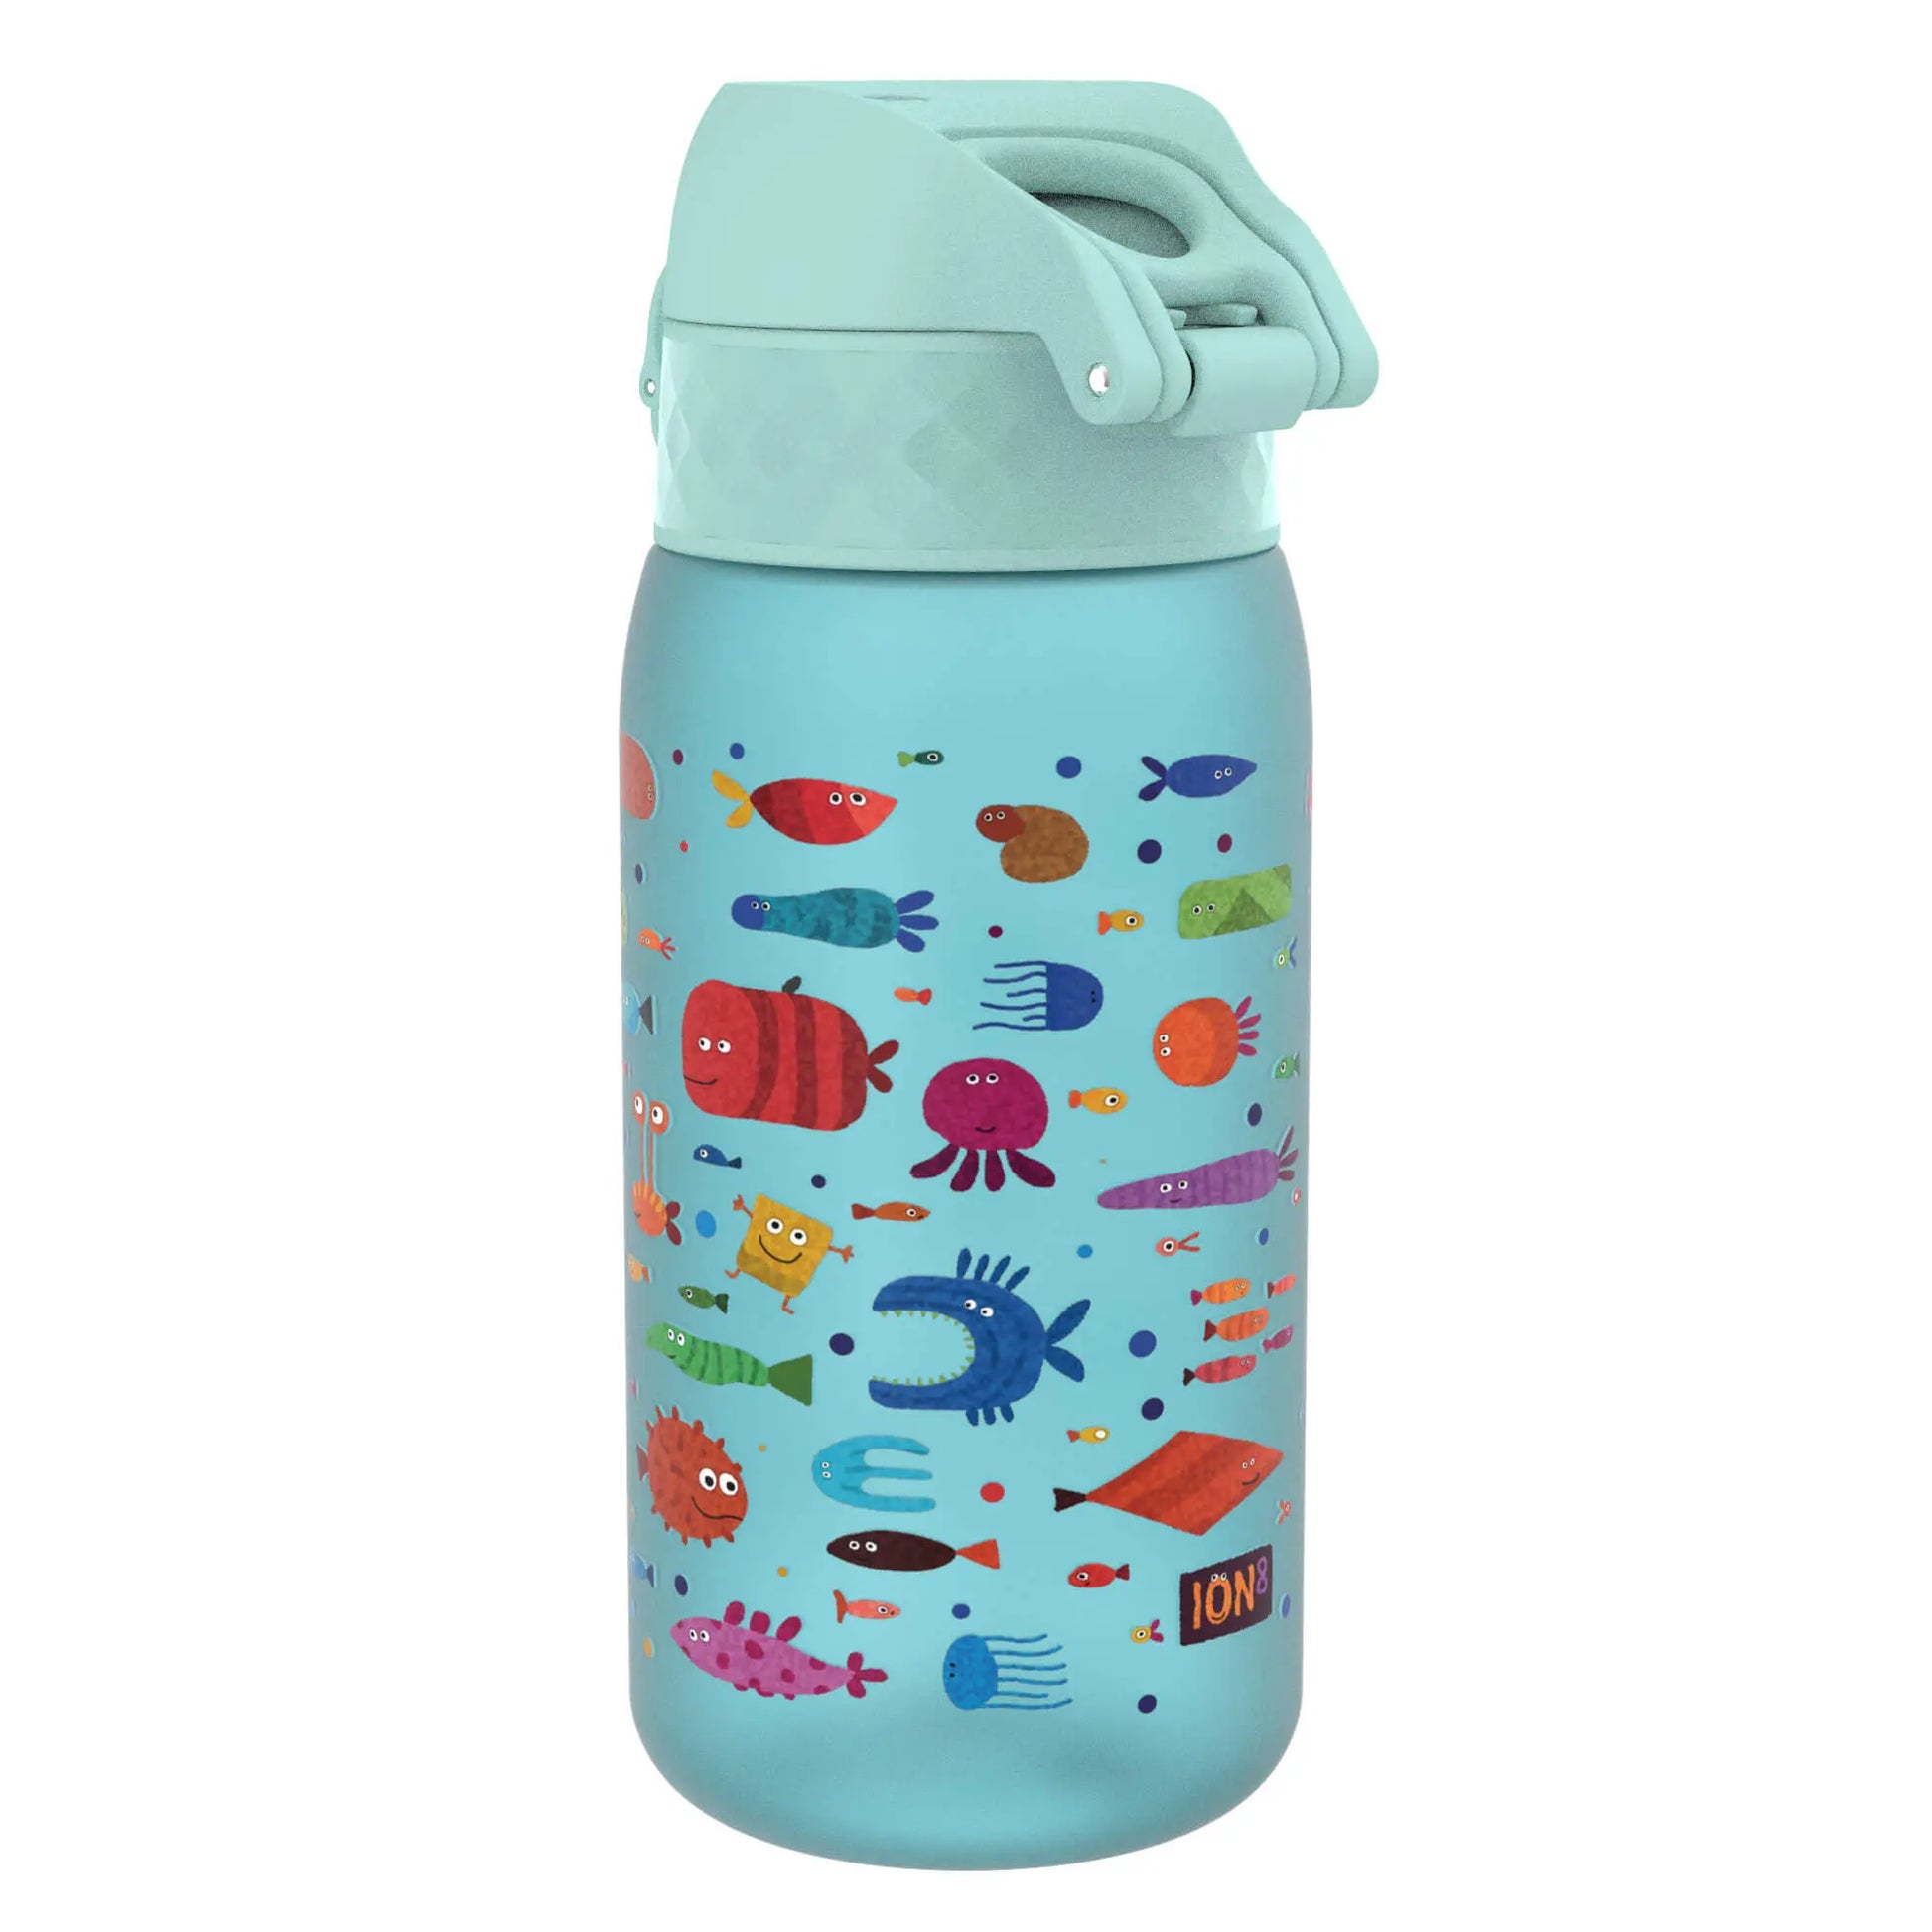 Back View of Ion8 Leak Proof Kids Water Bottle, BPA Free, Fish, 400ml (13oz)